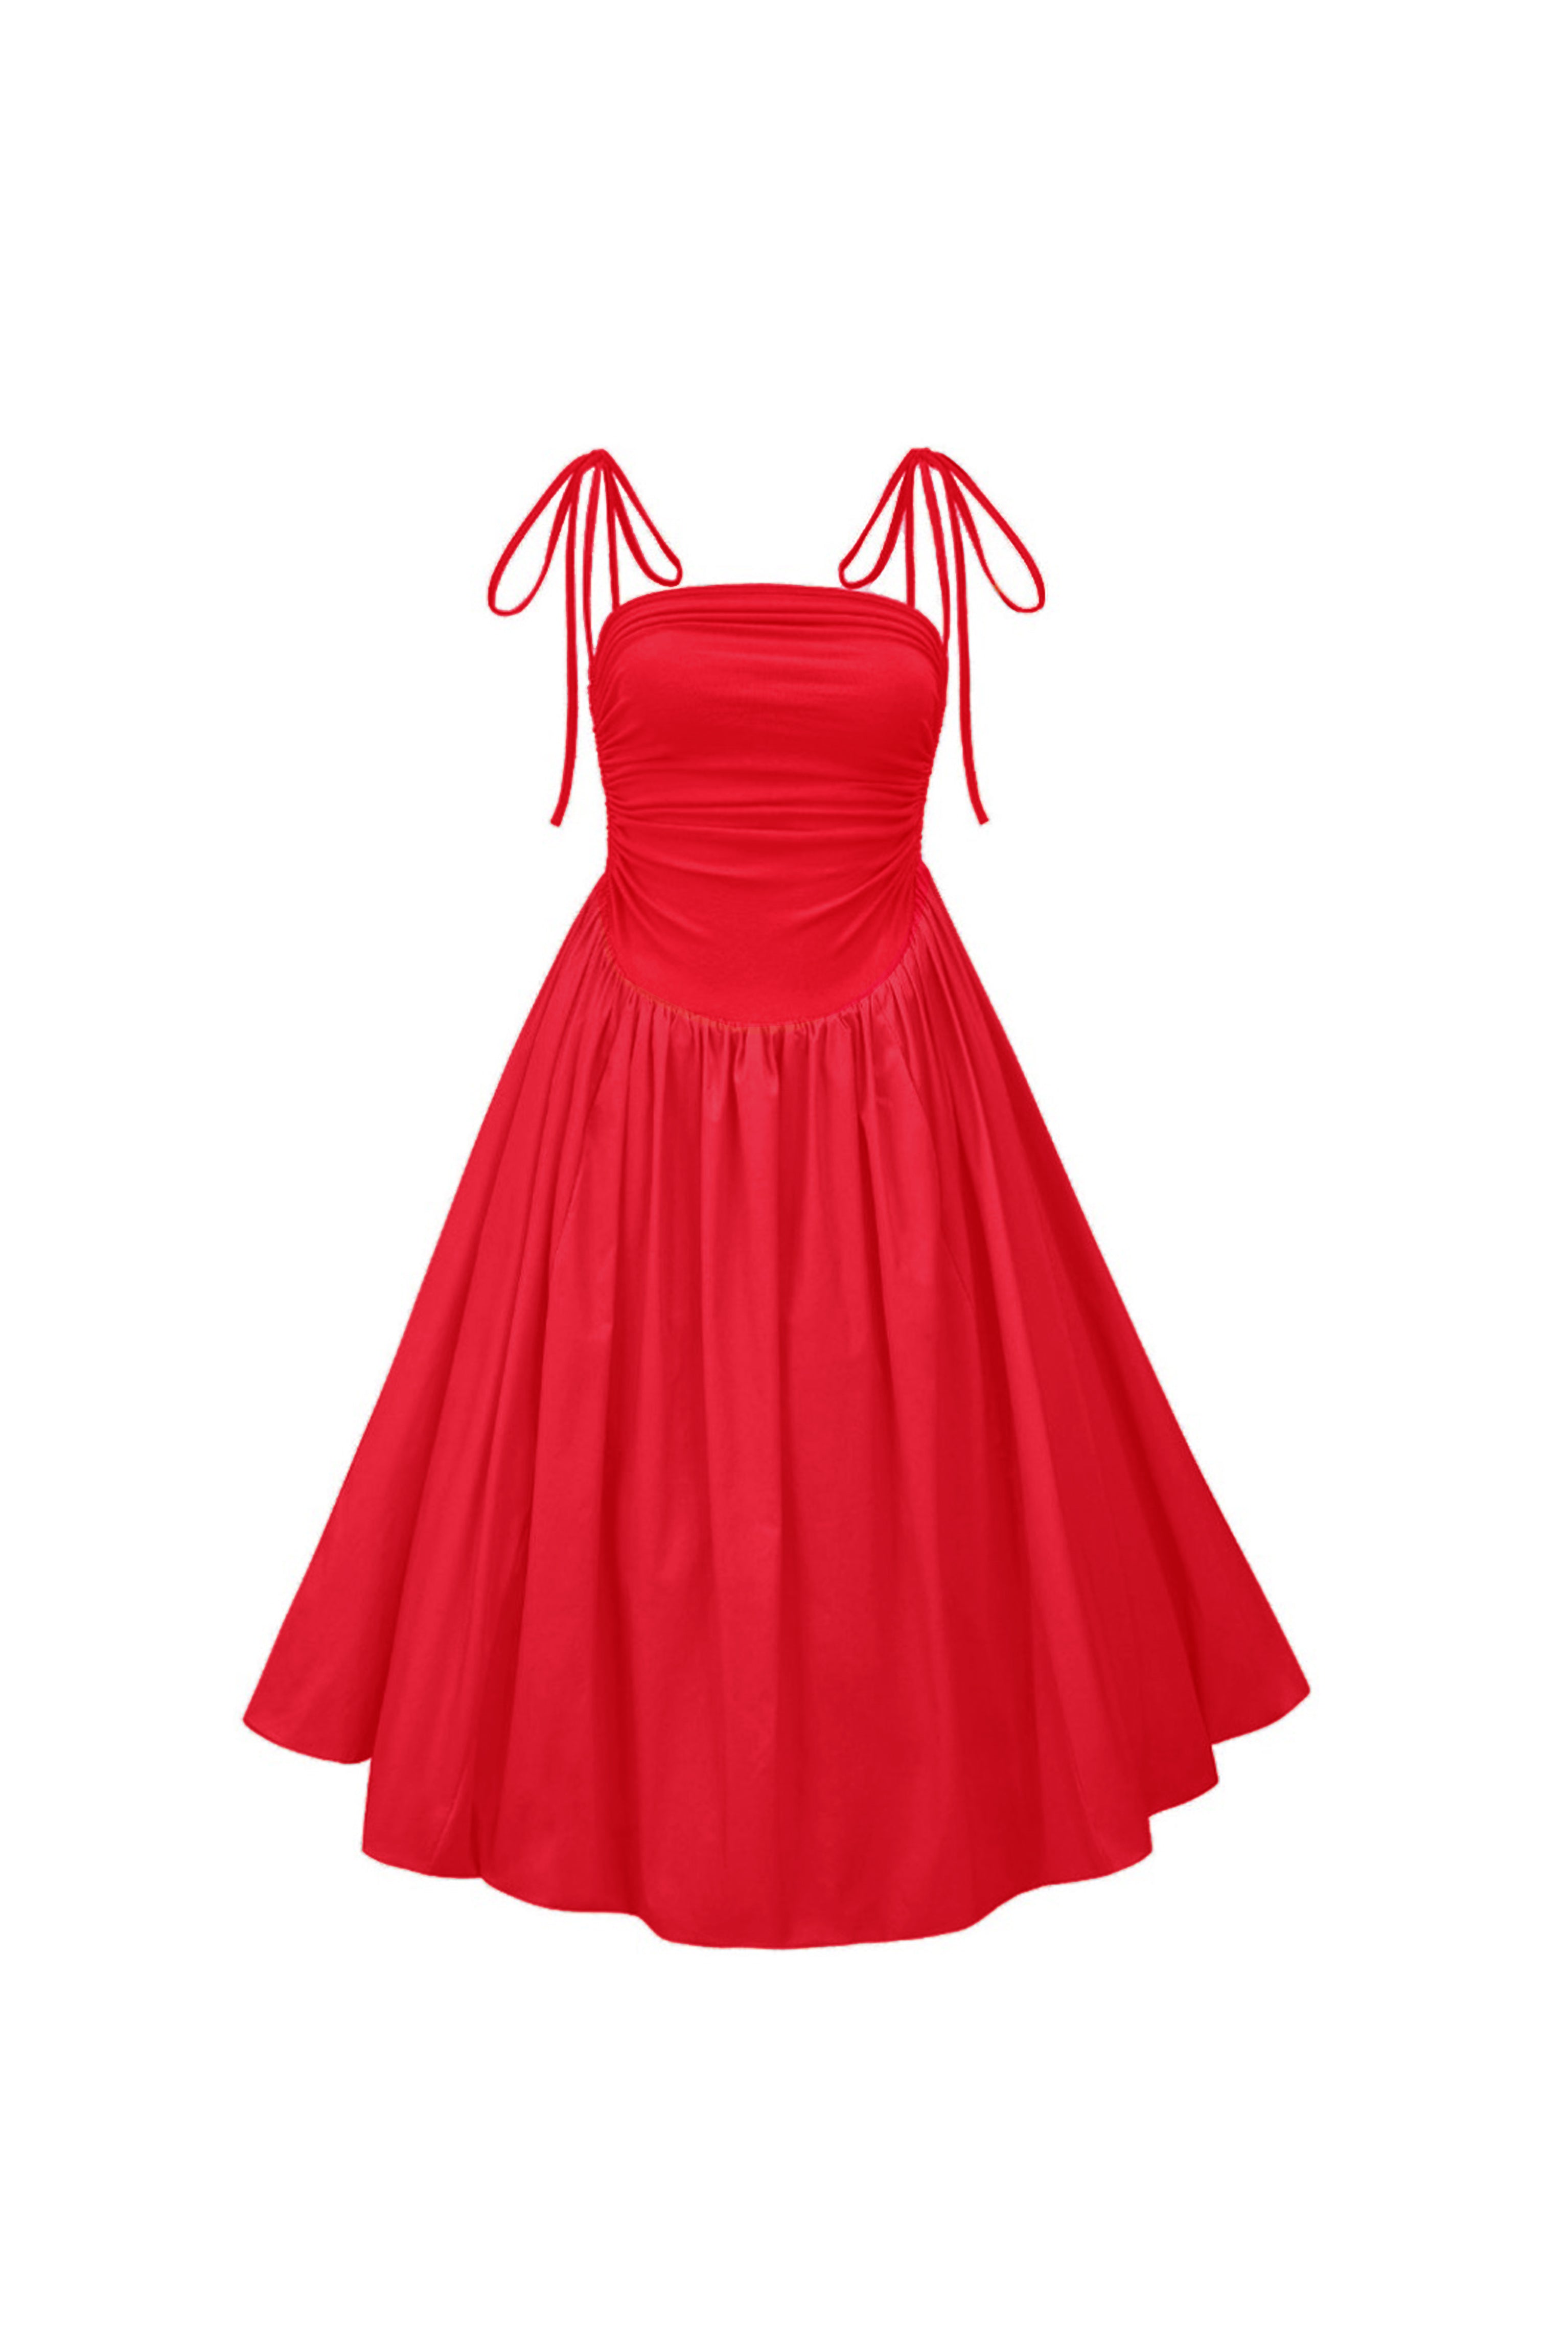 Alexa Cherry Red Puffball Dress